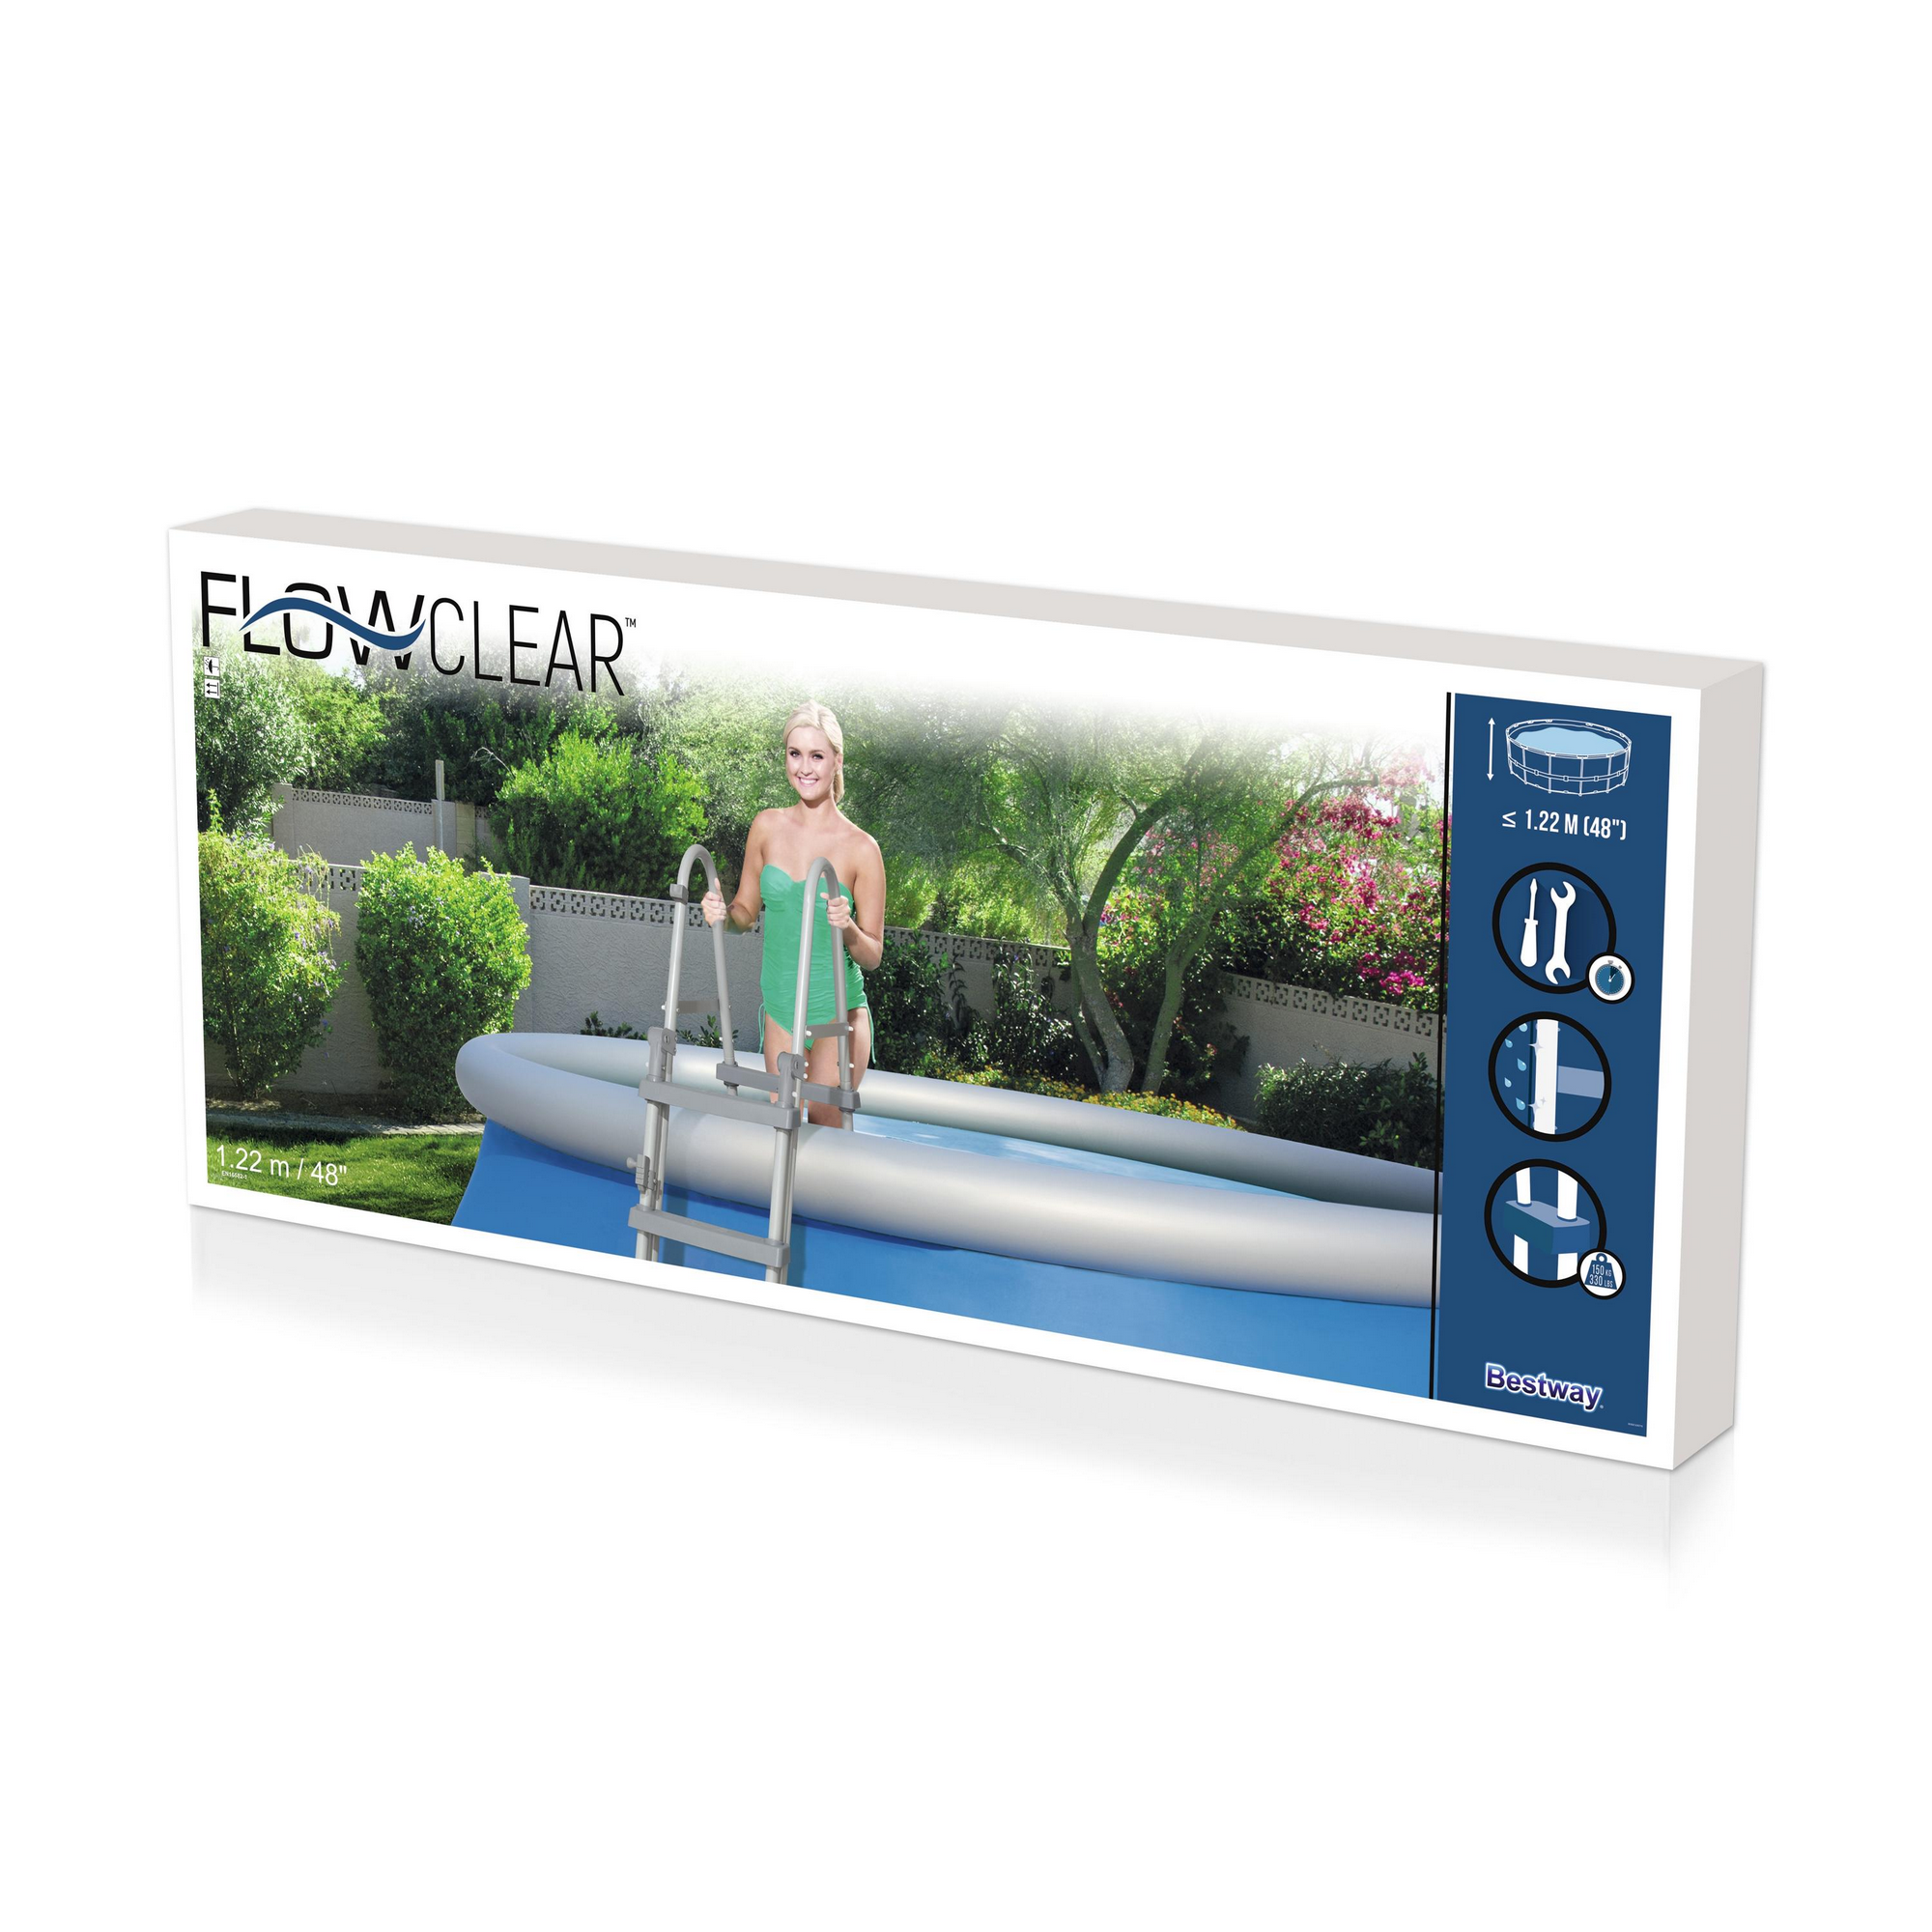 Pool-Übersteigleiter 'Flowclear' 4-Stufig, 122 cm + product picture